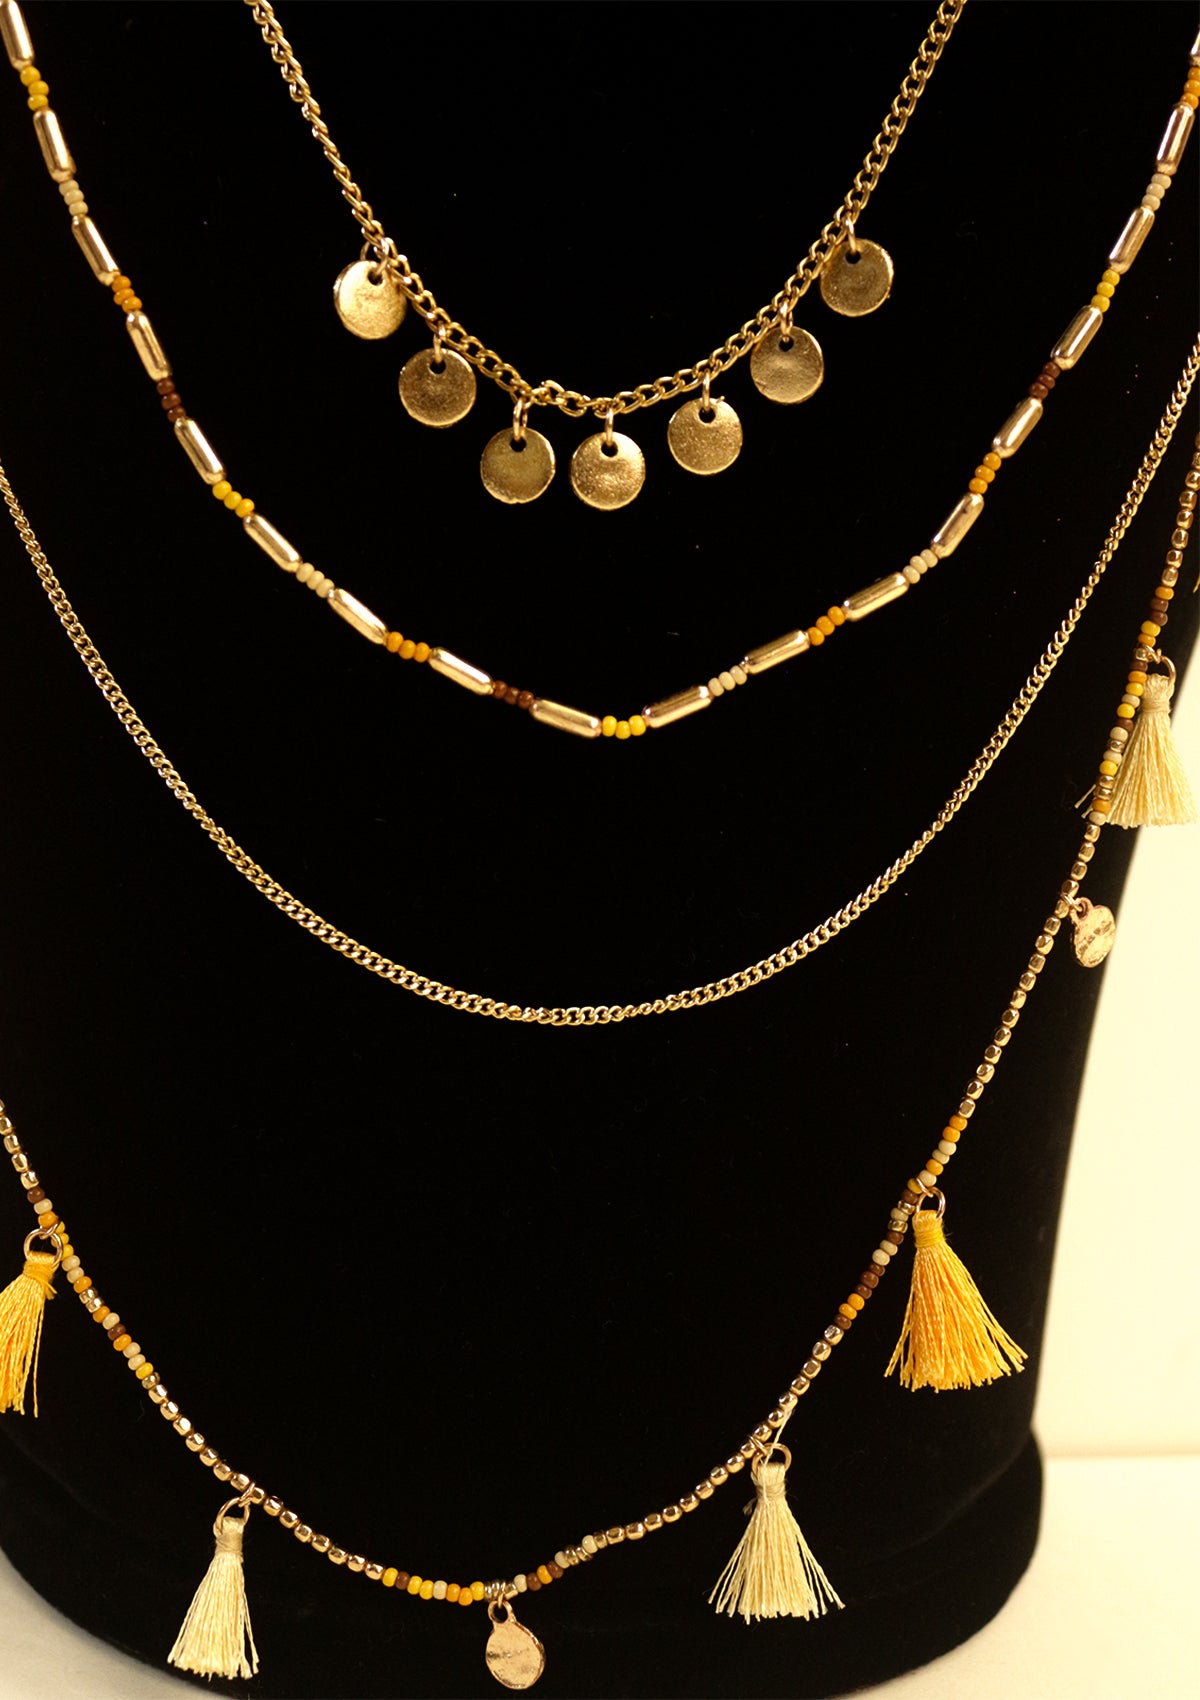 Multilayered tasseled necklace